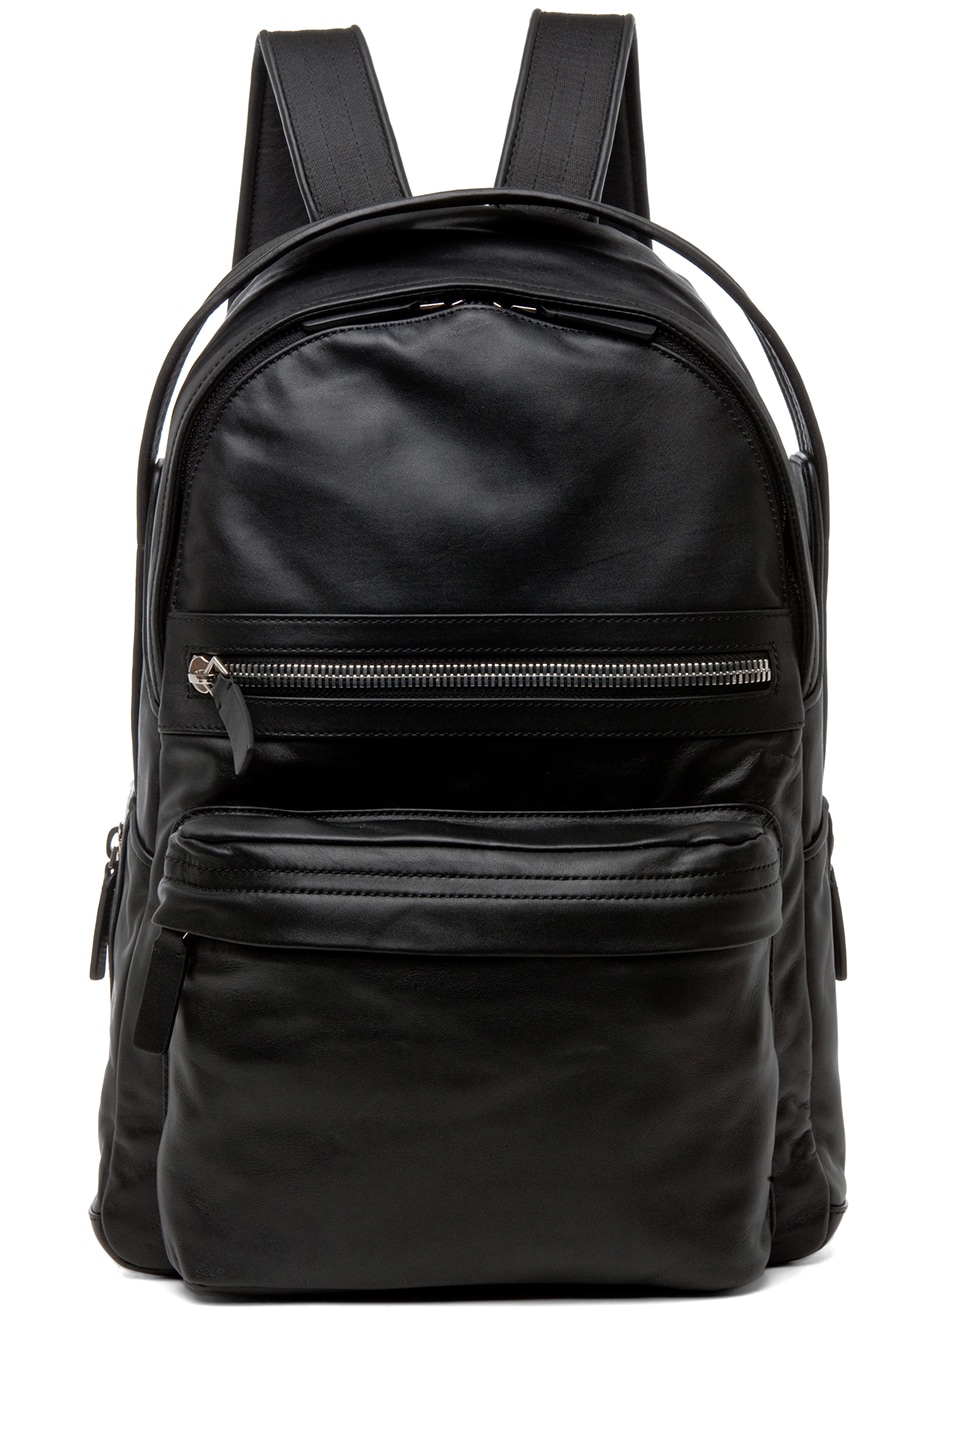 Image 1 of Alejandro Ingelmo Berlin Backpack in Black Leather